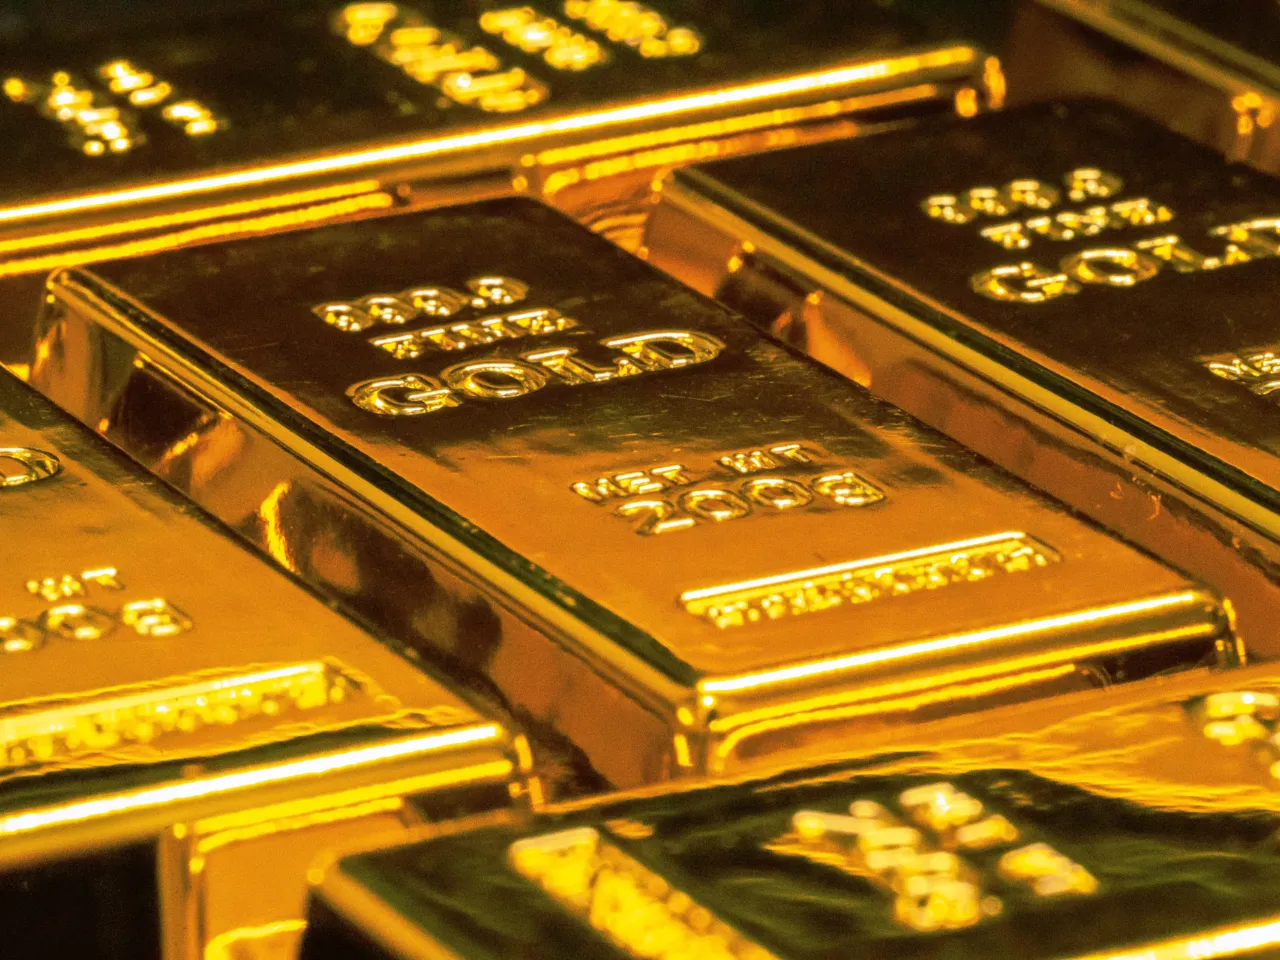 Gold loan platform Rupeek raises Rs 40Cr at over 60% valuation cut: Report